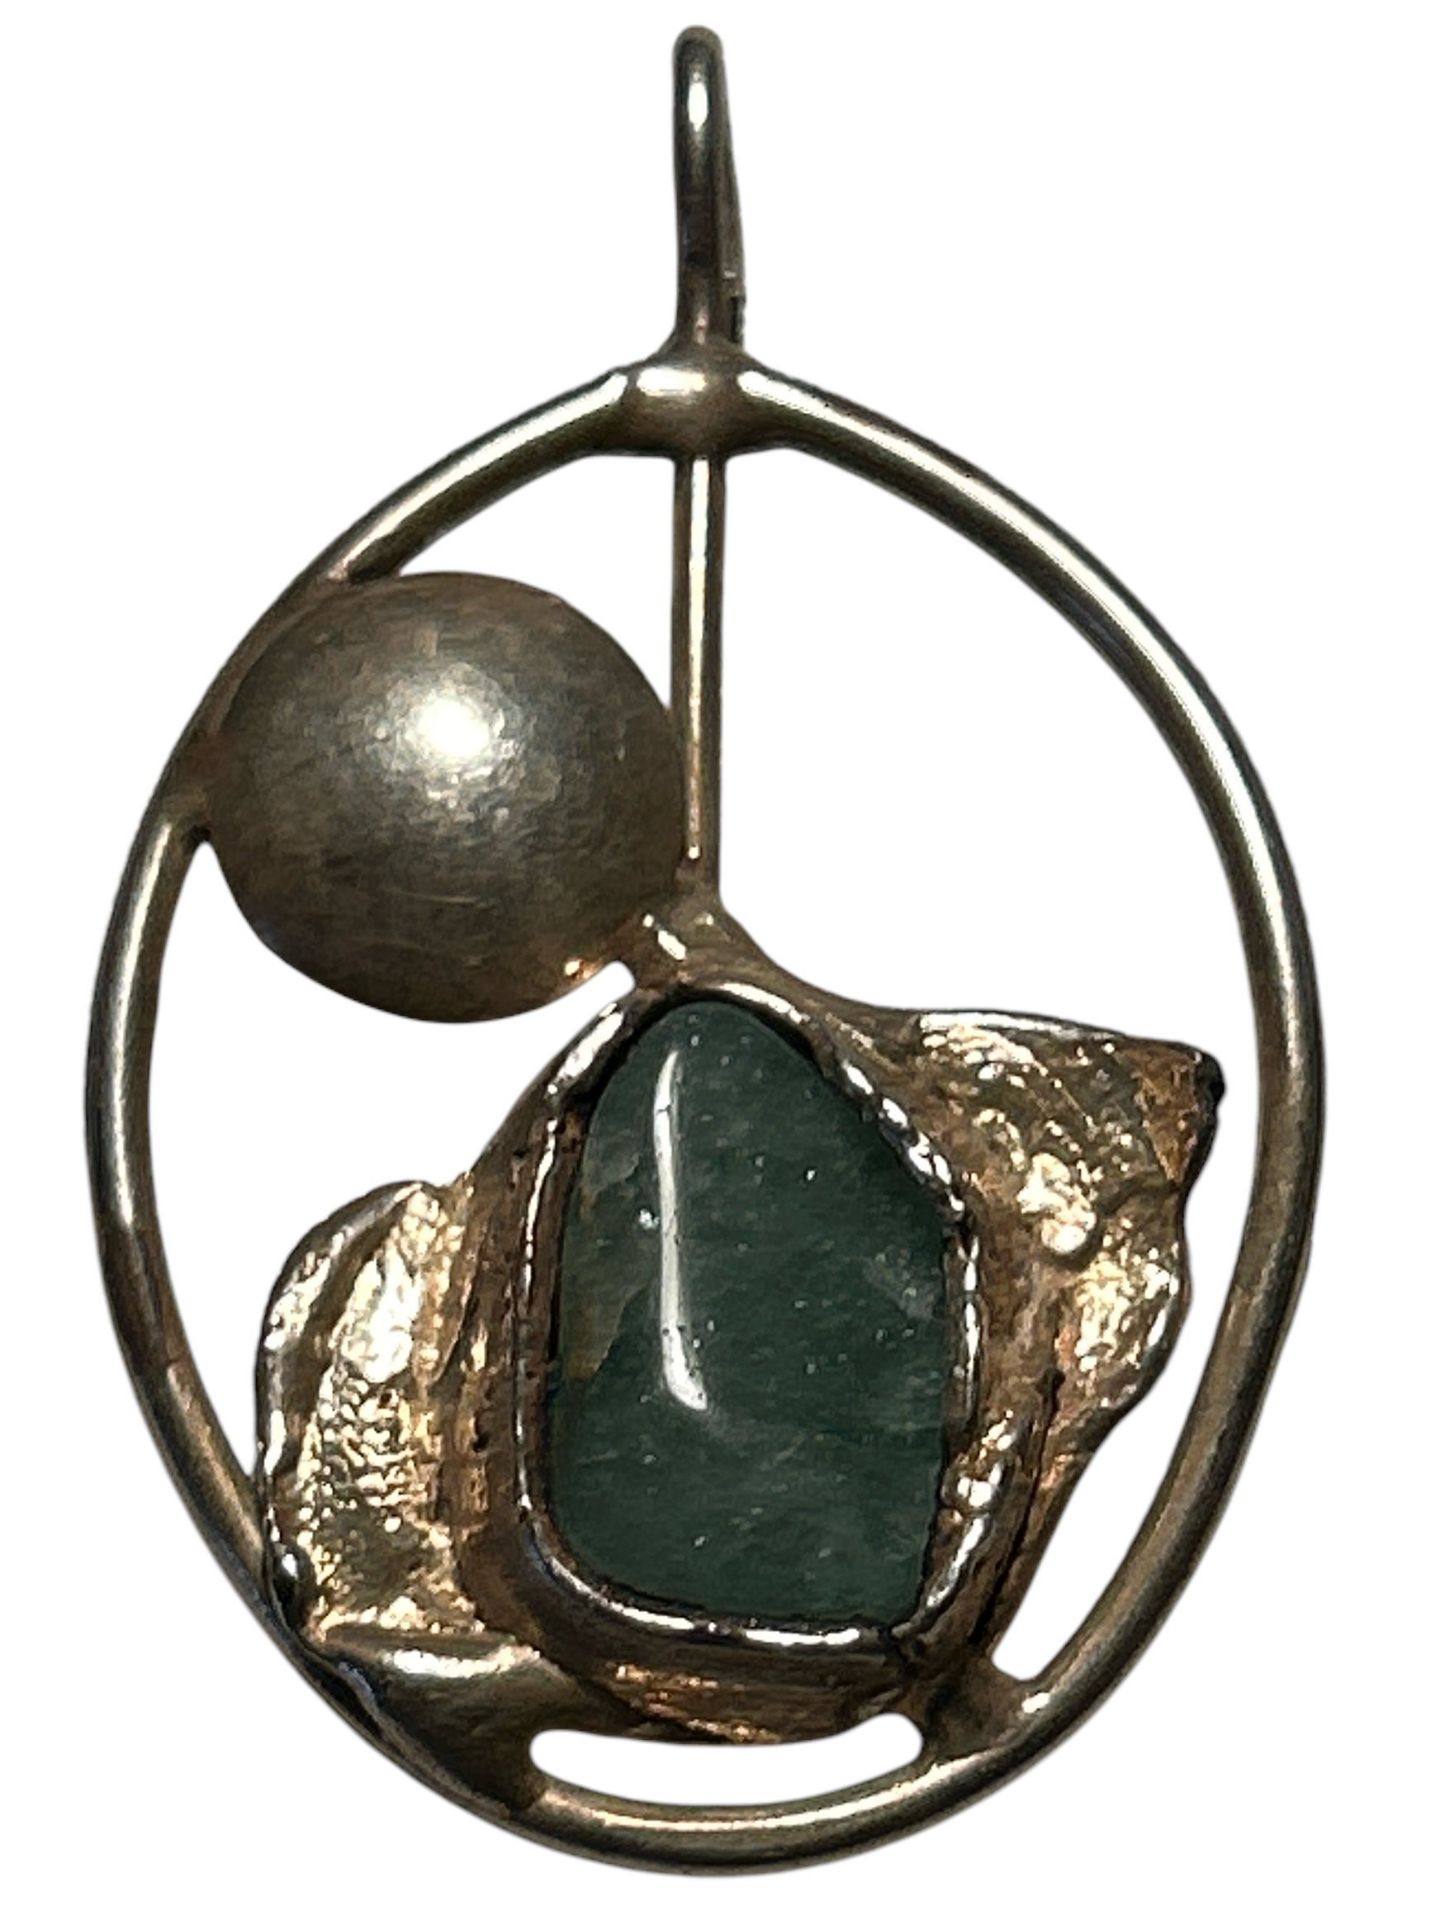 gr. Silber-Designer Anhänger mit grünen Stein, Handarbeit, 7x4 cm, vergoldet??, 34 gr. Rand unleser